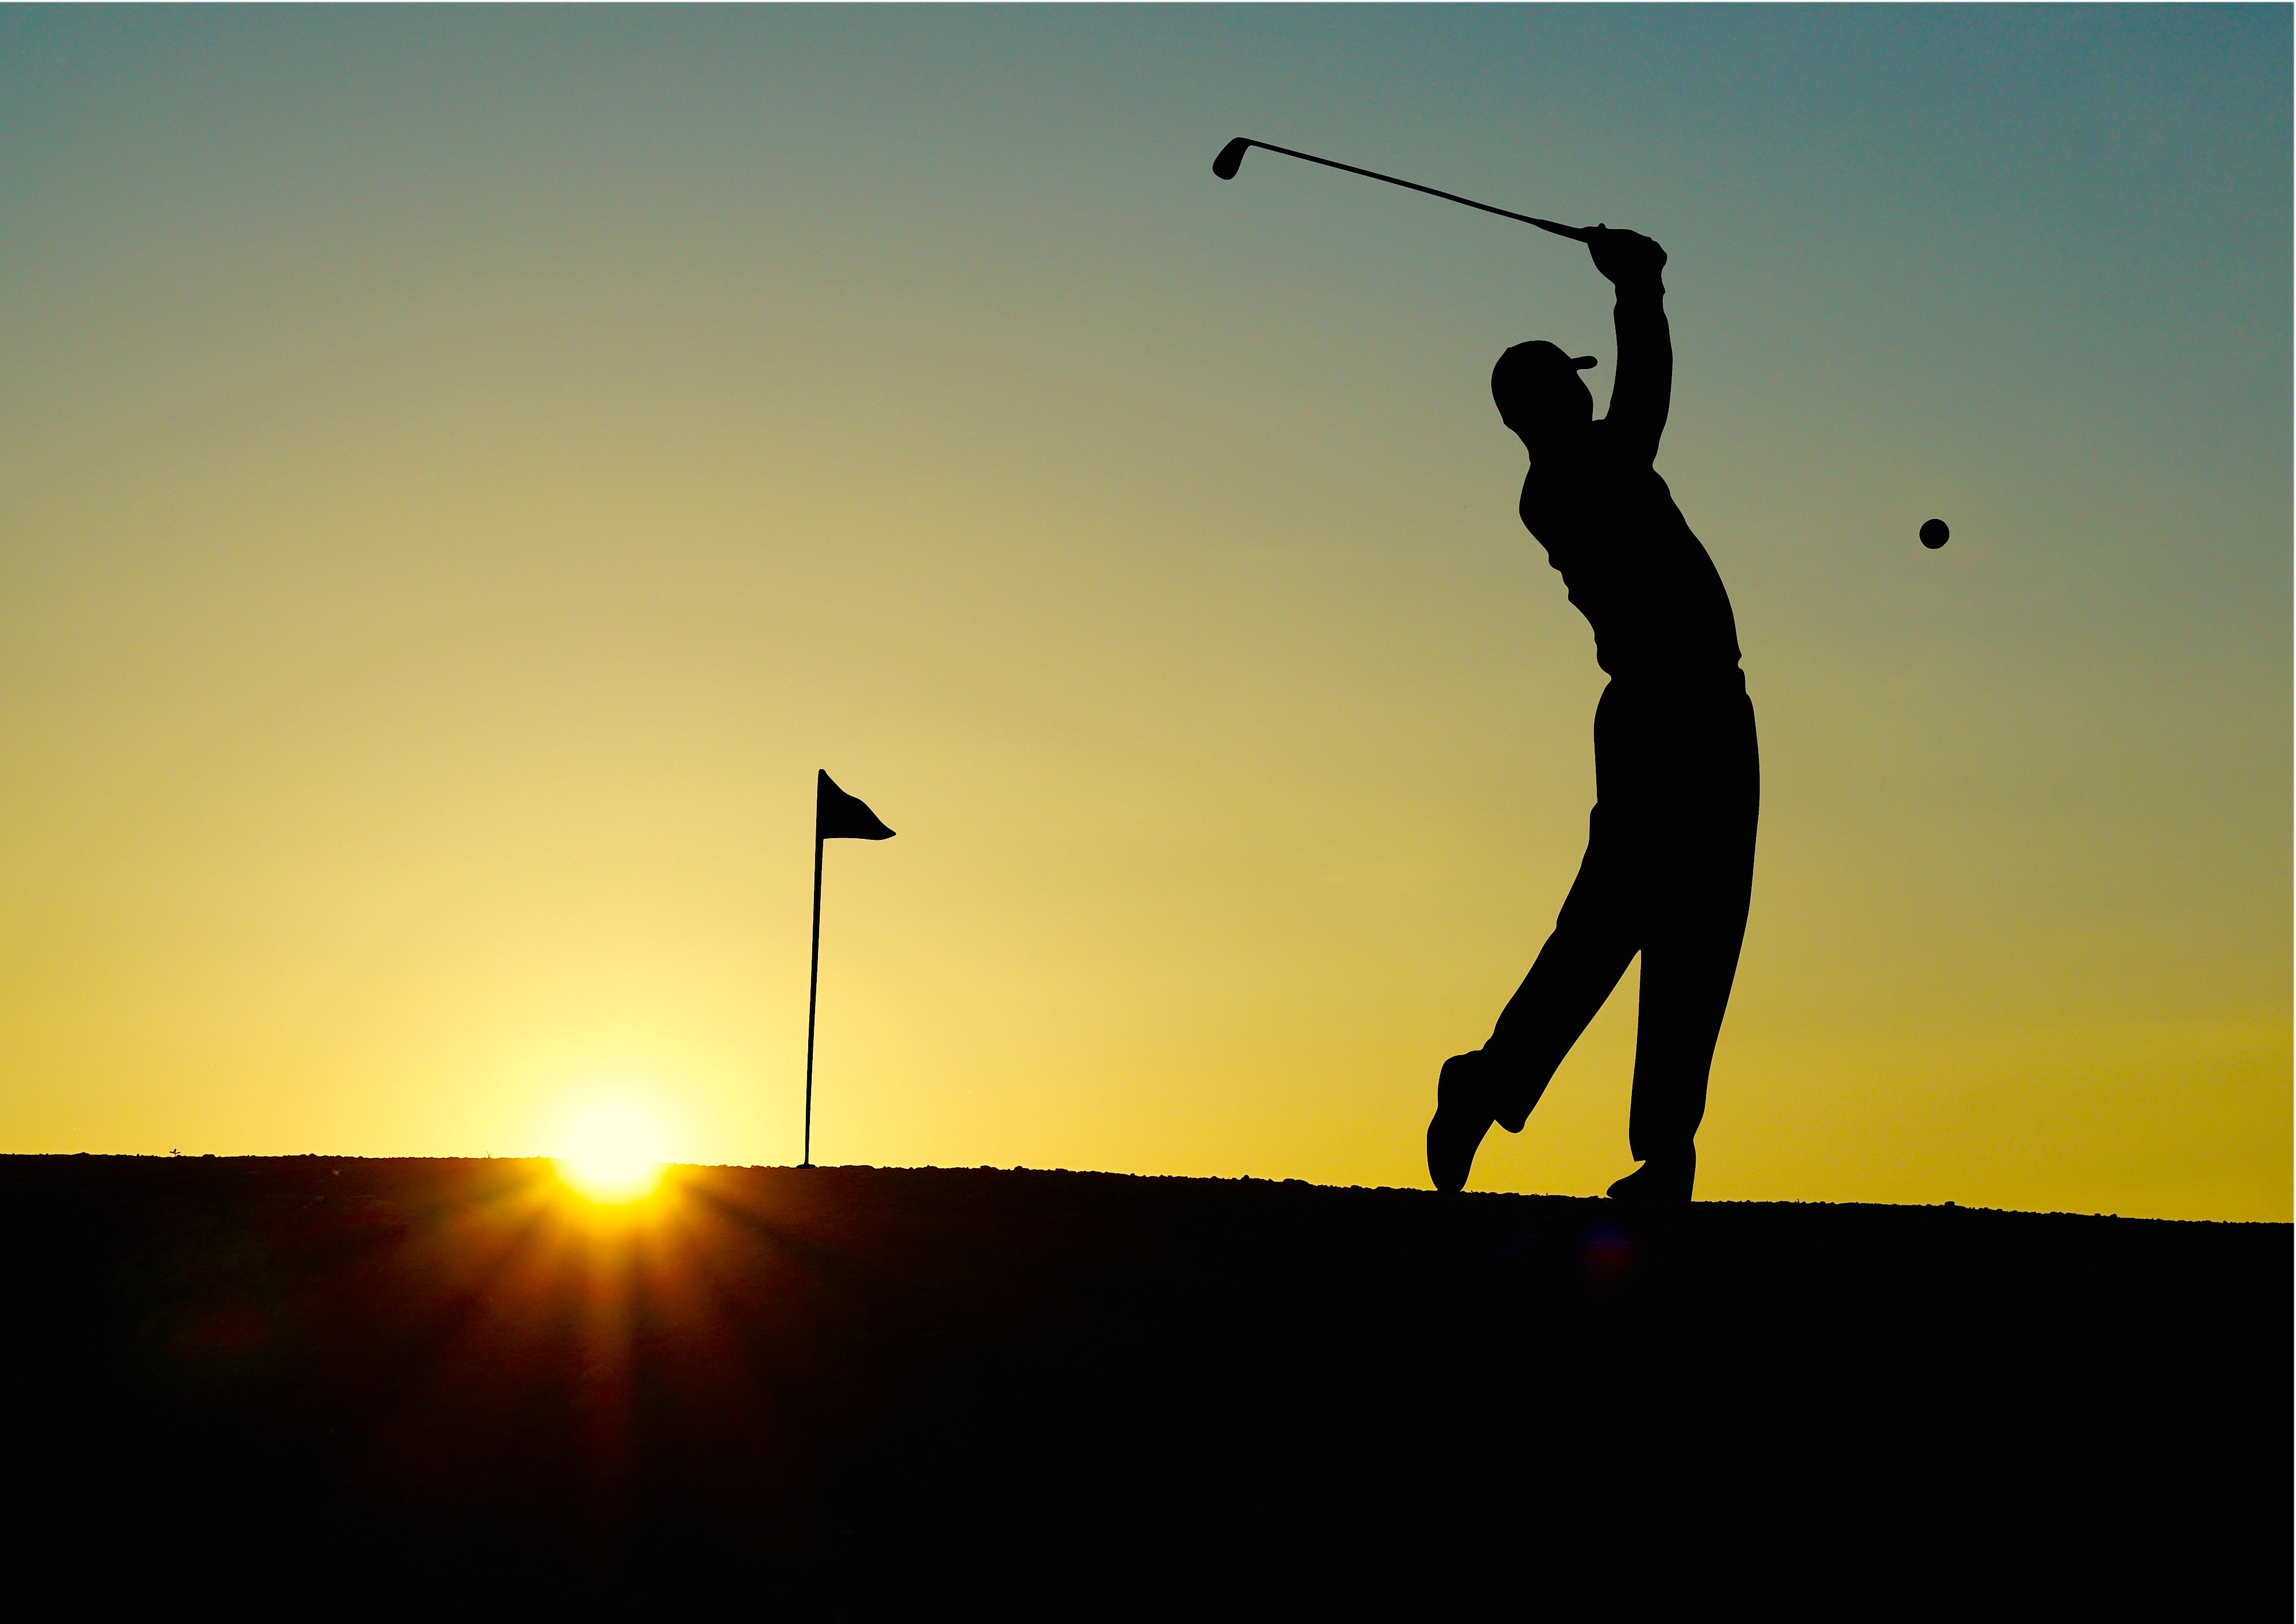 What sport do you enjoy. Golf. Гольф спорт. Гольф картинки. Гольфист со спины.